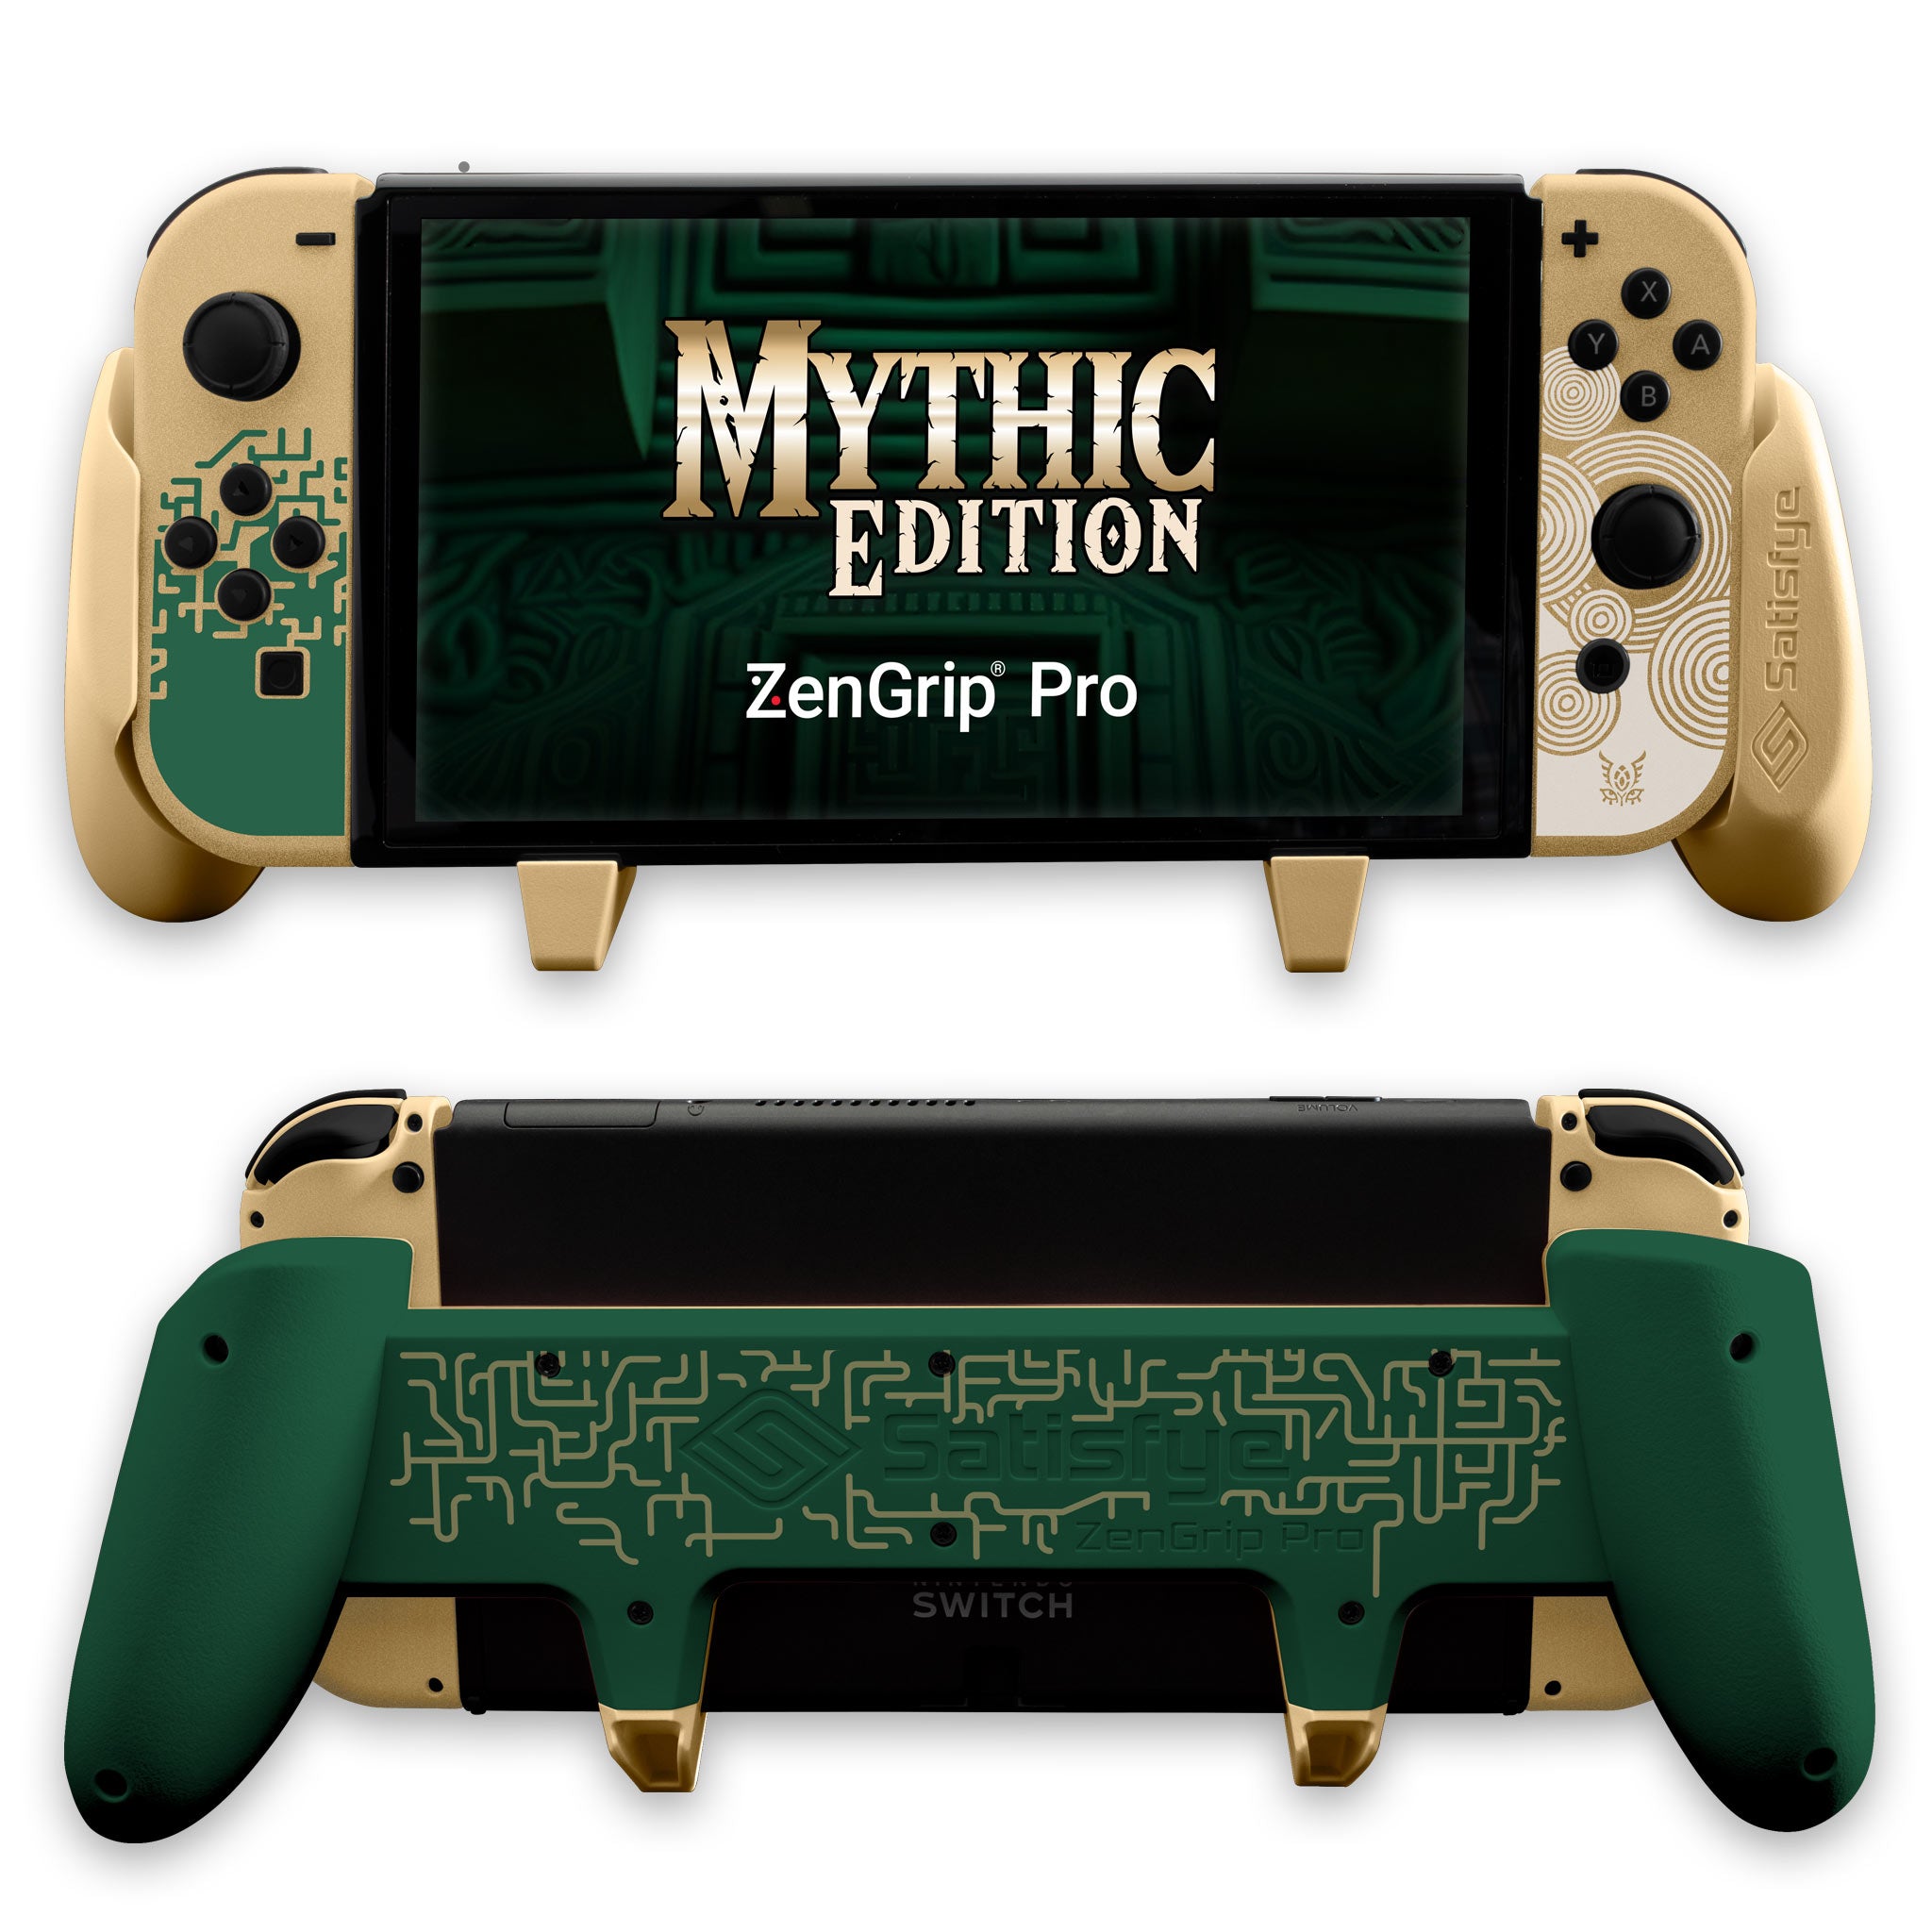 ZenGrip Pro Mythic Edition